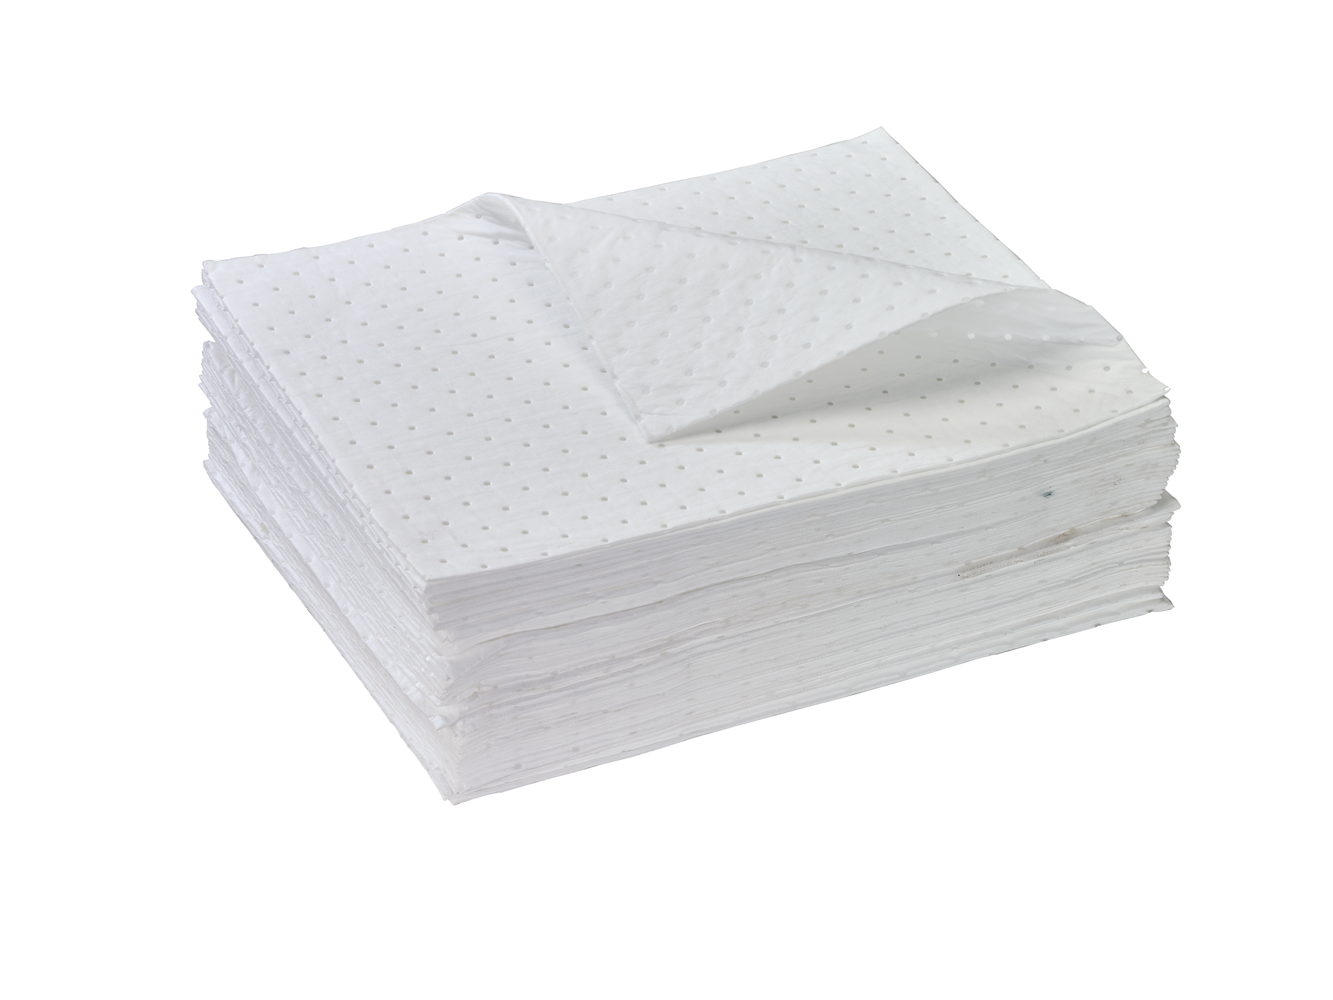 Best Workplace Absorbent Materials: Absorbent Pads, Pillows, Socks